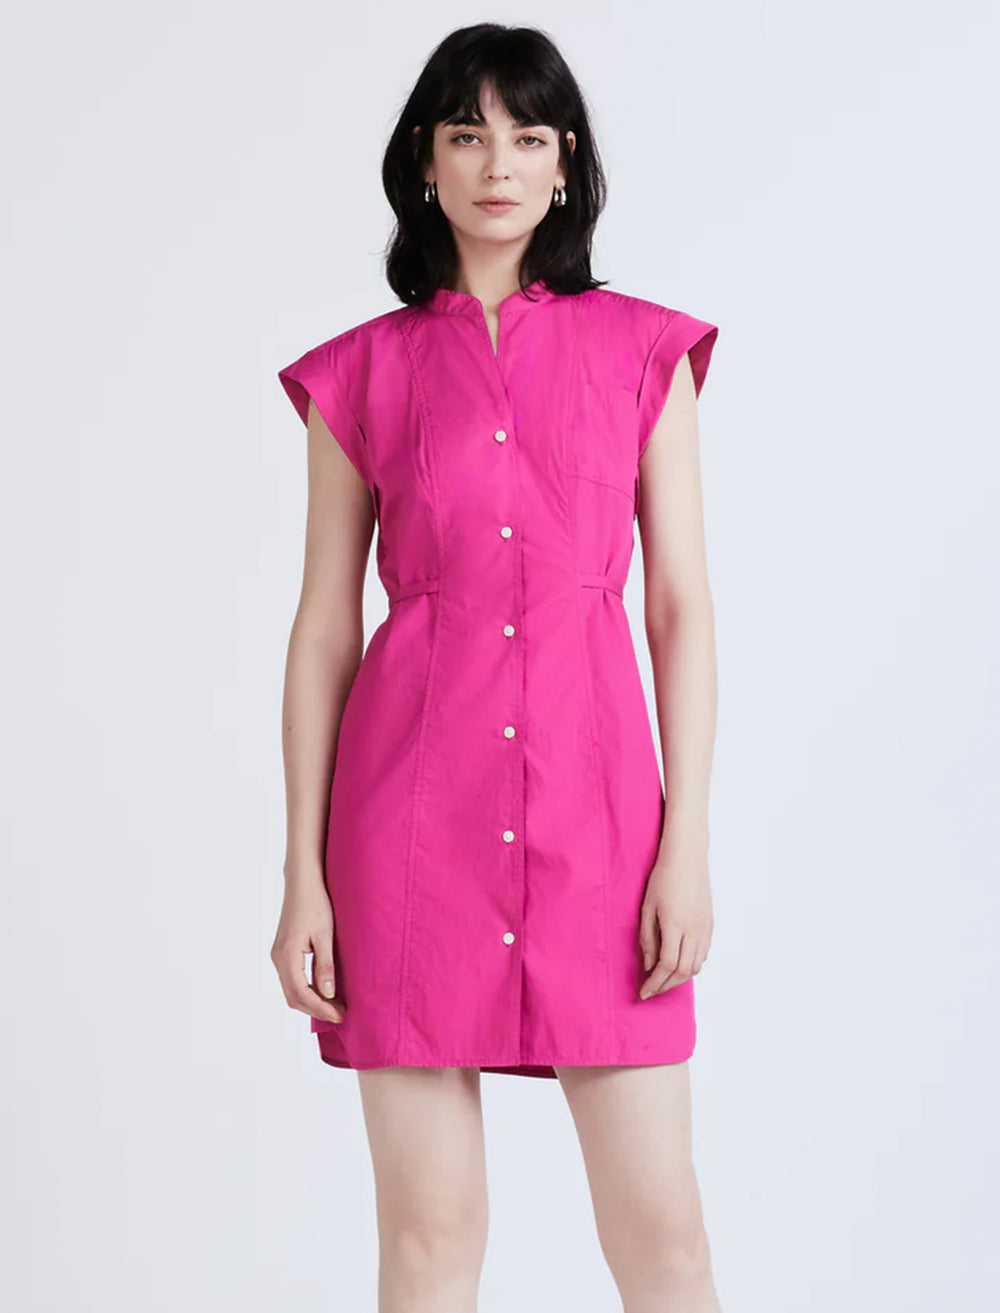 Model wearing Derek Lam 10 Crosby's peyton sleeveless shirt dress in berry.